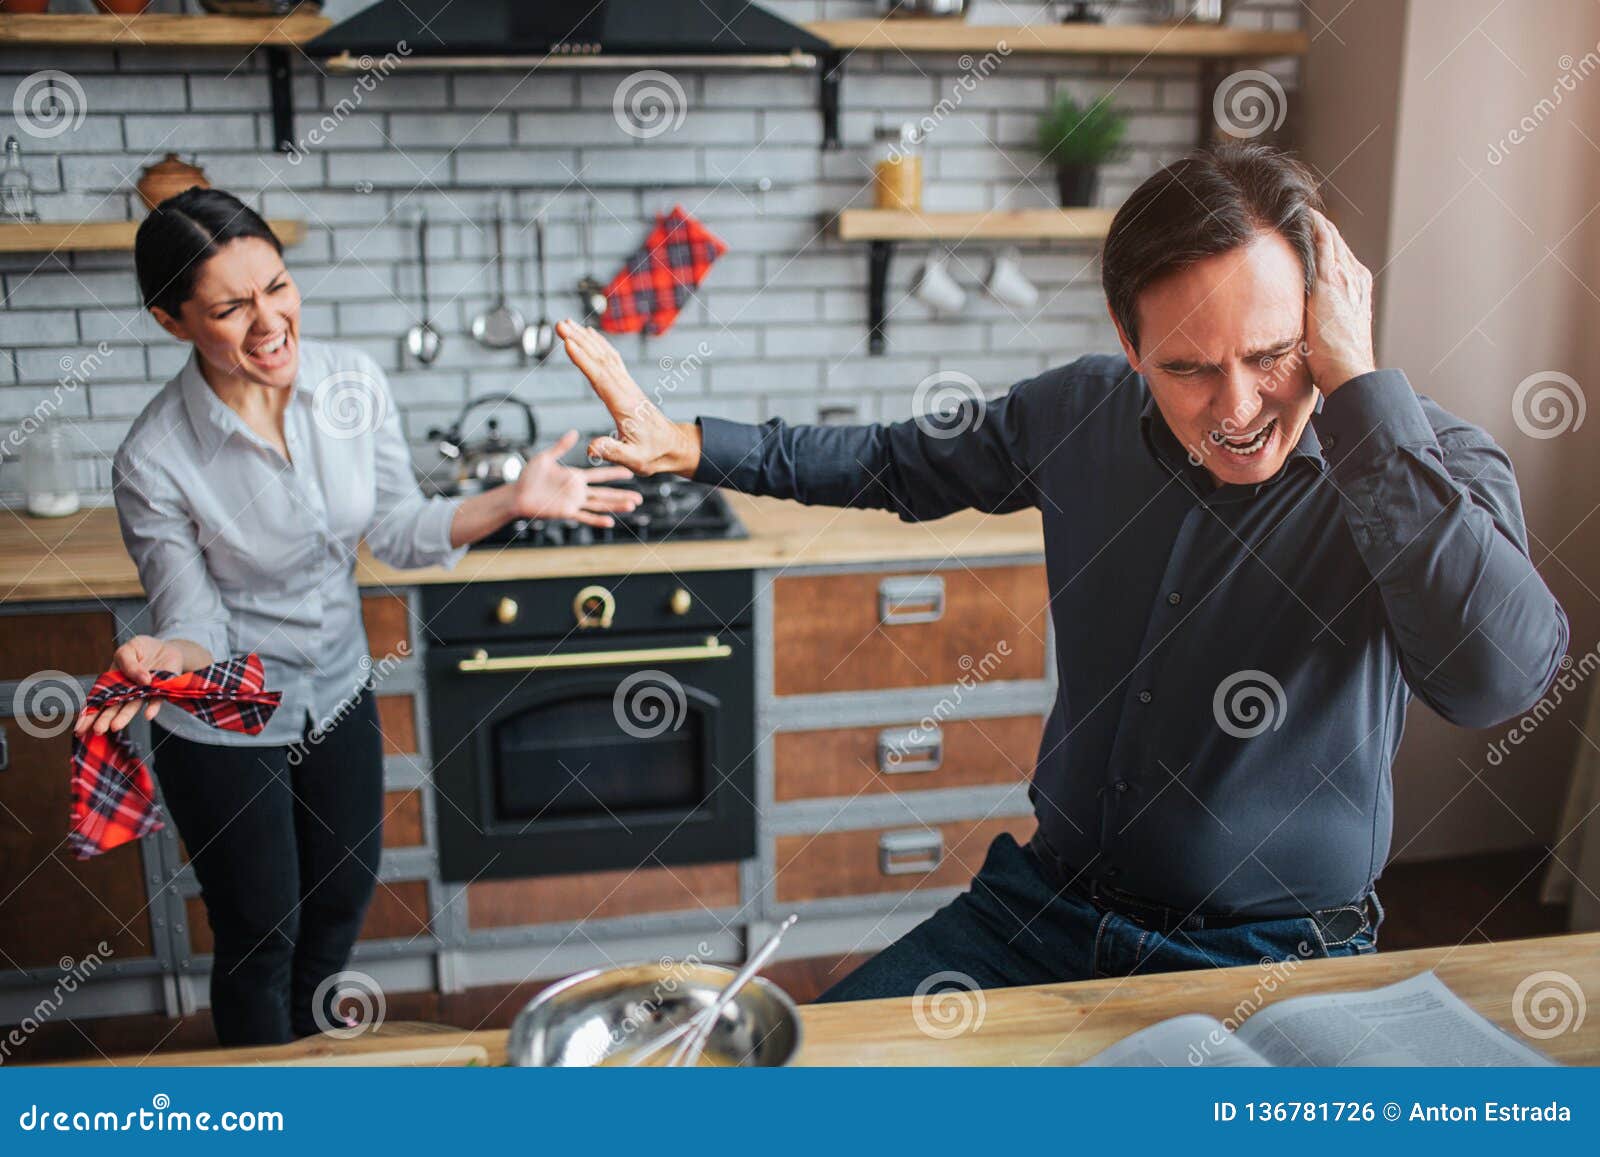 Грязные разговоры на кухне. Муж и жена на кухне за столом. Мужчина сидит за столом на кухне. Люди сидят на кухне. Муж с женой сидят за столом на кухне.